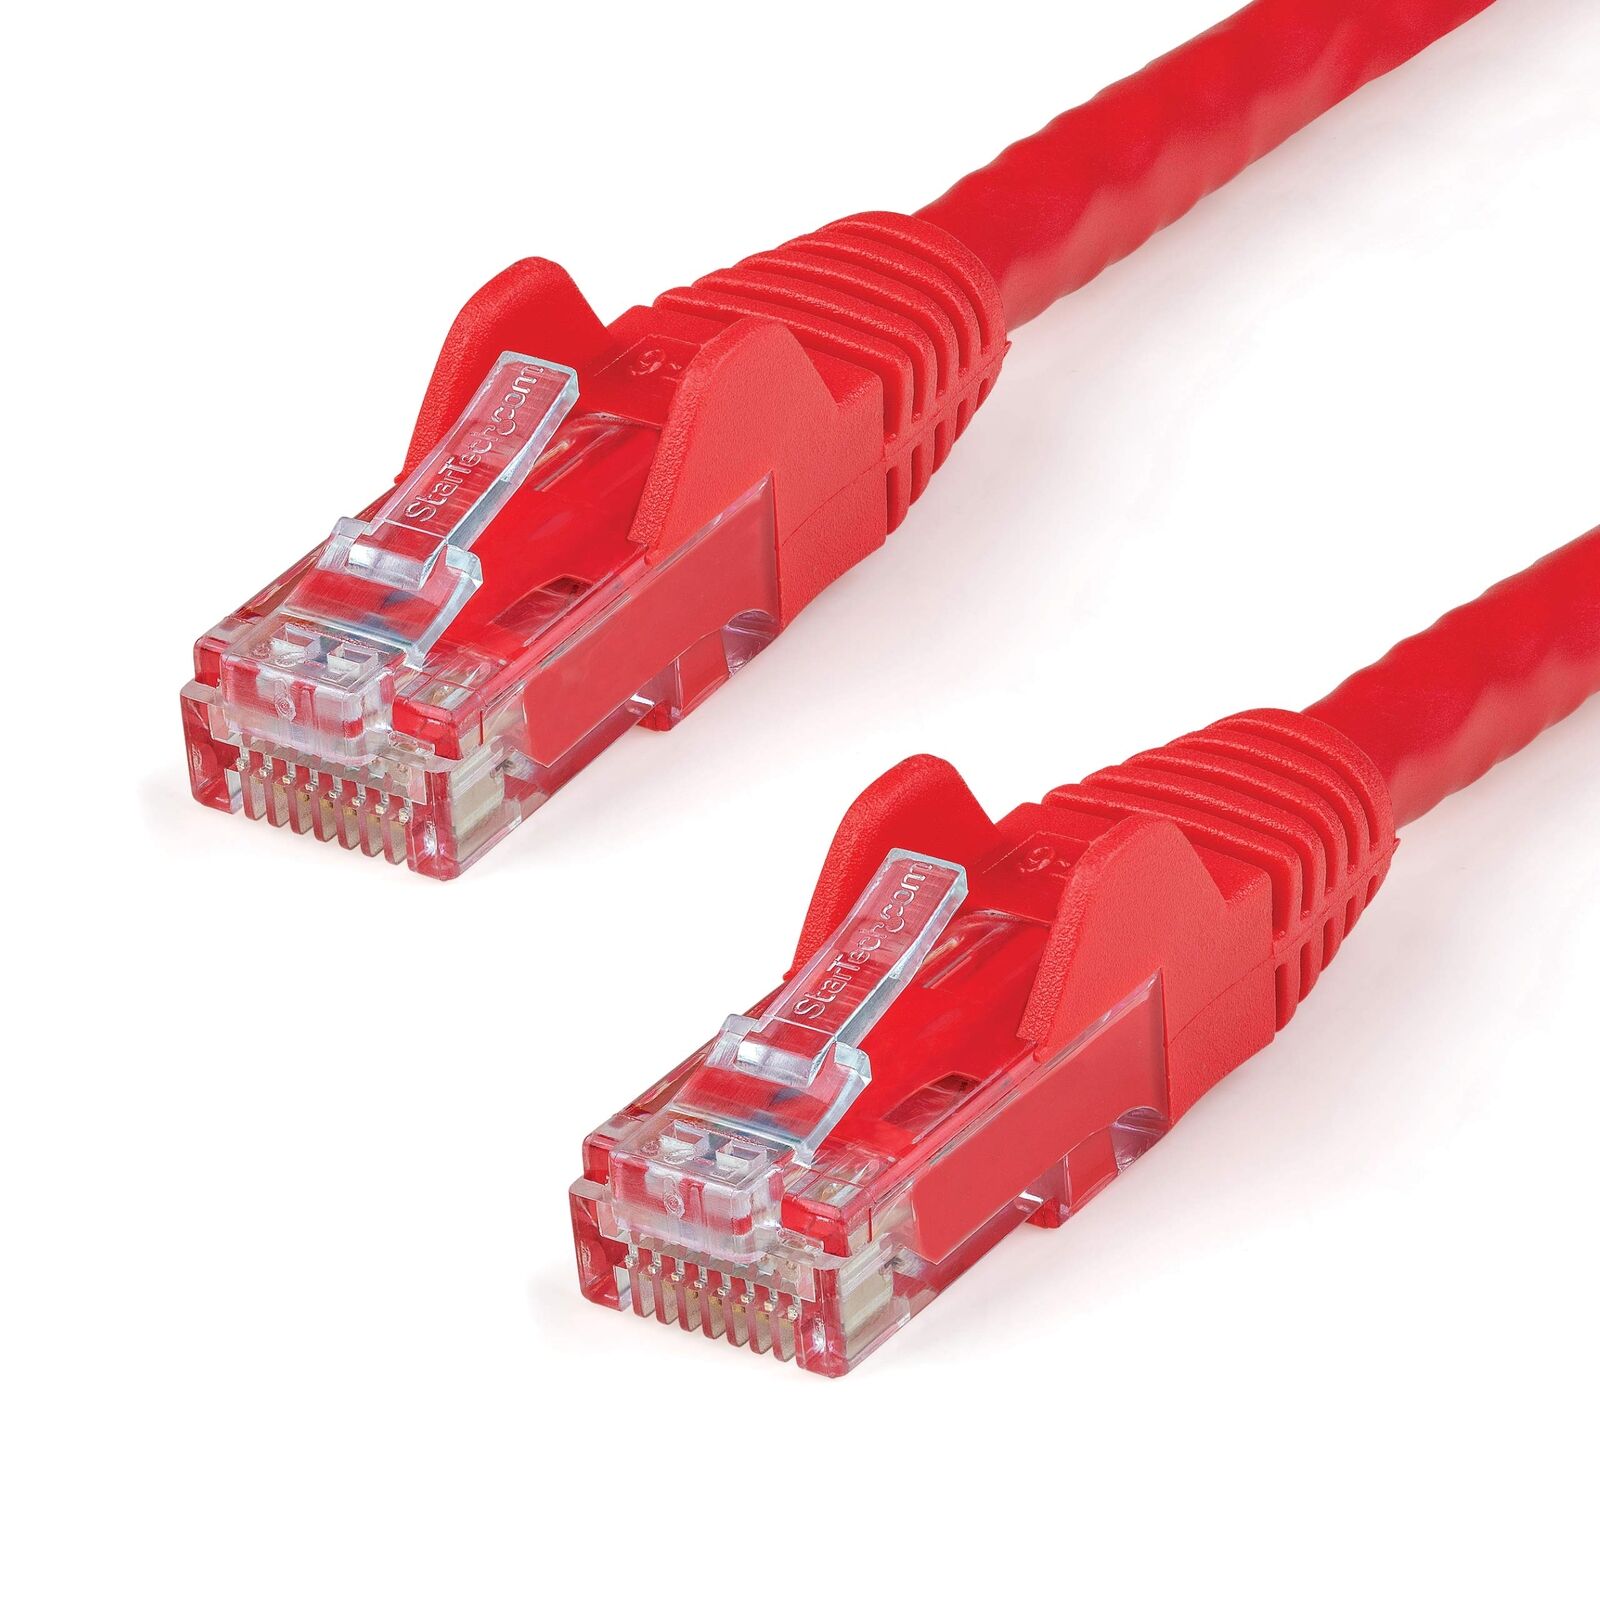 StarTech.com 5m CAT6 Ethernet Cable - Red CAT 6 Gigabit Ethernet Wire -650MHz 10